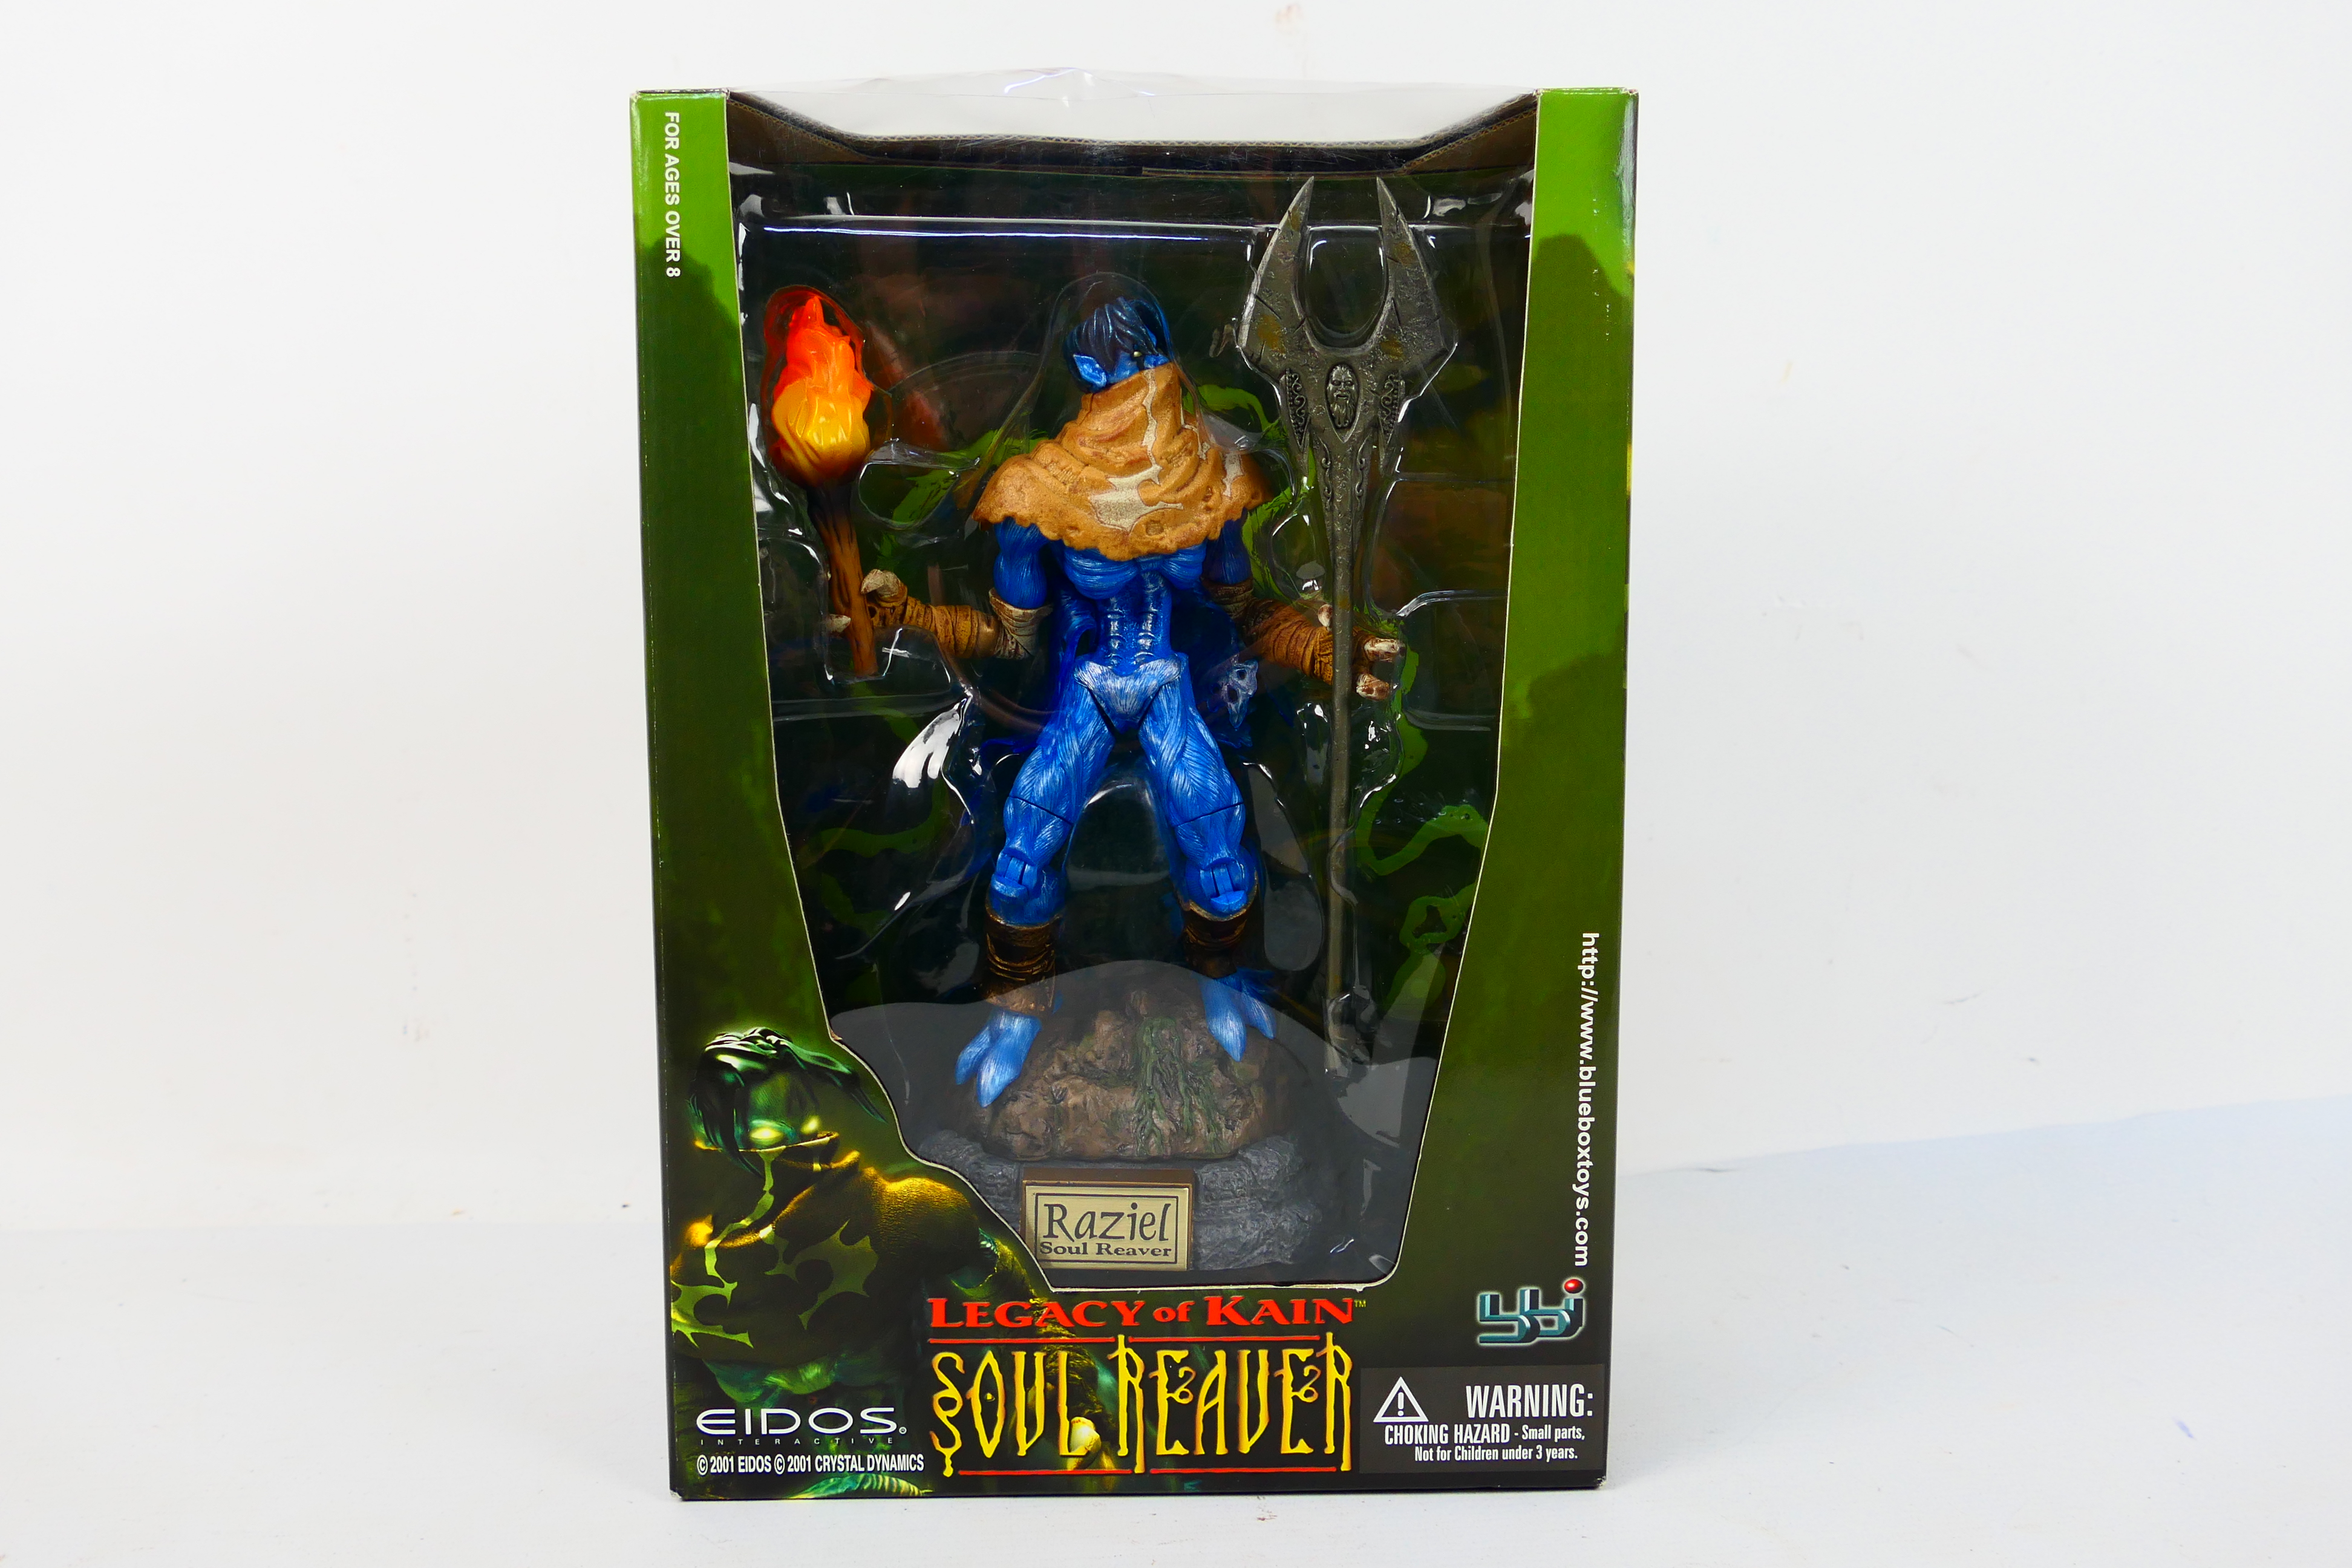 Eidos - A boxed Legacy of Kain Soul Reaver 'Raziel' figure - The #34276 figure appears mint in box.